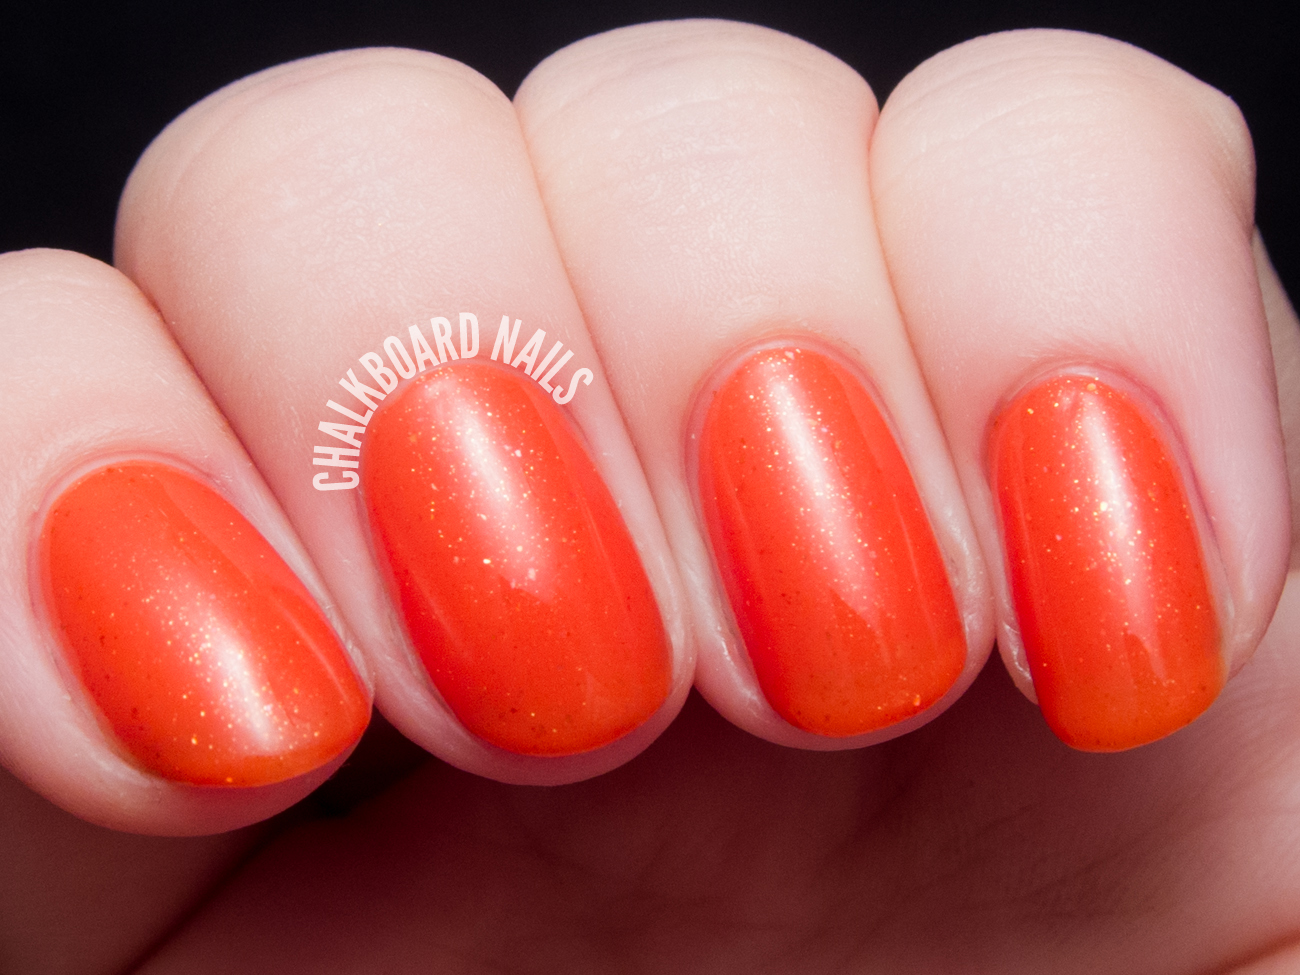 Contrary Polish Valencia Orange via @chalkboardnails